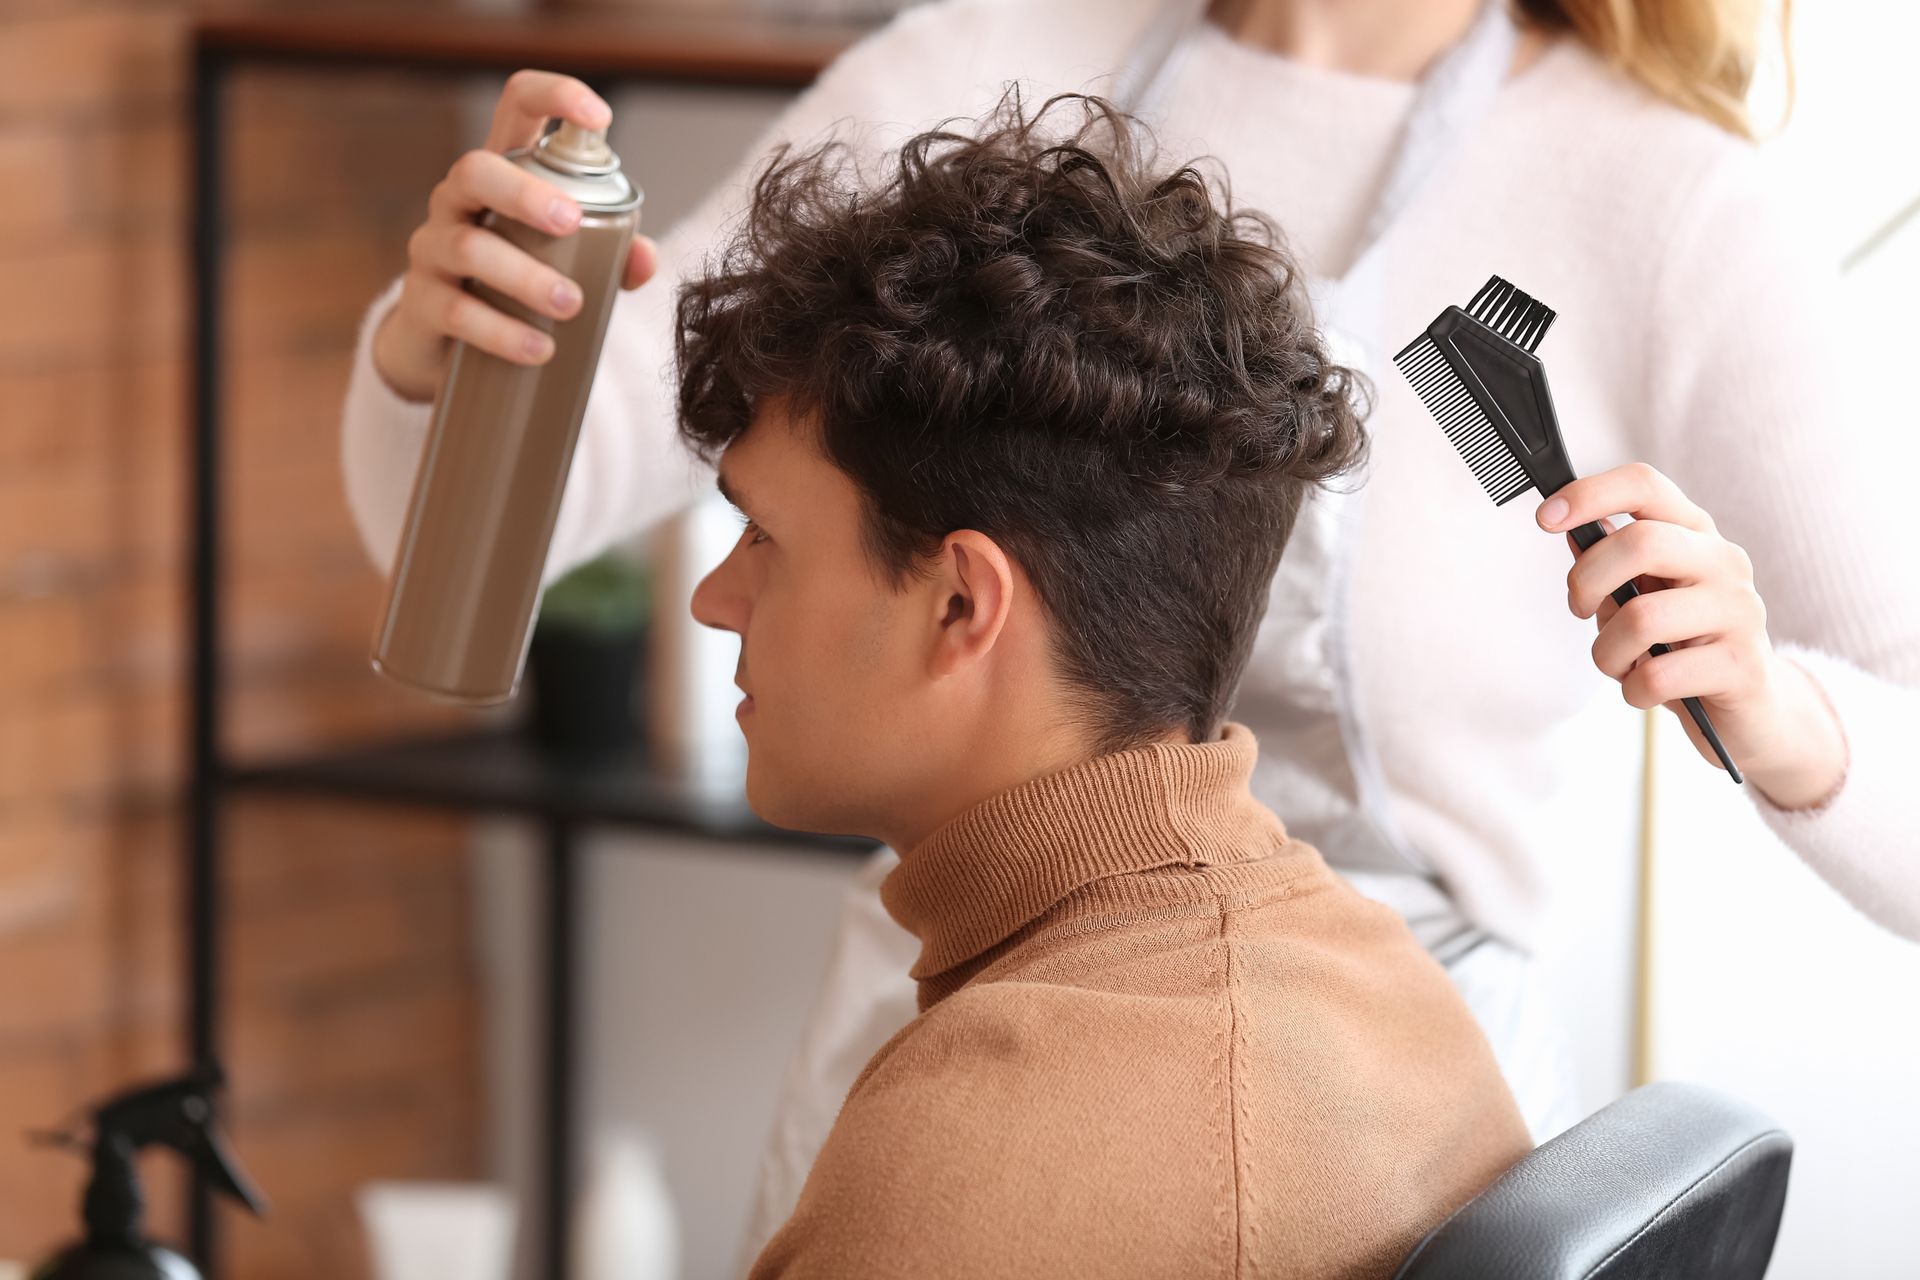 A man is getting his hair cut by a woman in a salon.